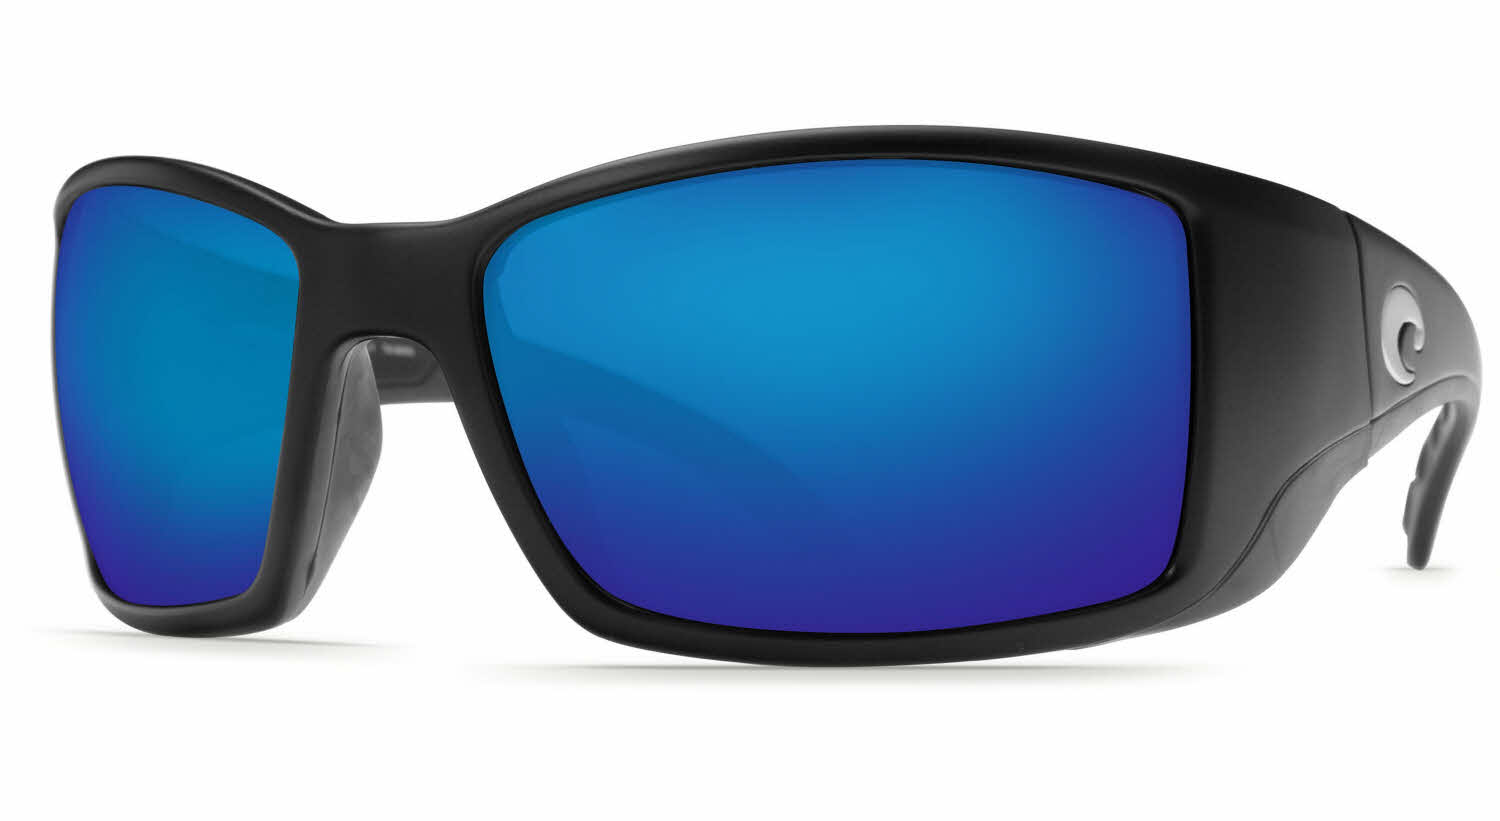 https://www.framesdirect.com/product_elarge_images/Costa-Del-Mar-BL-11Blckfin-sunglasses-BLK-BLU.jpg